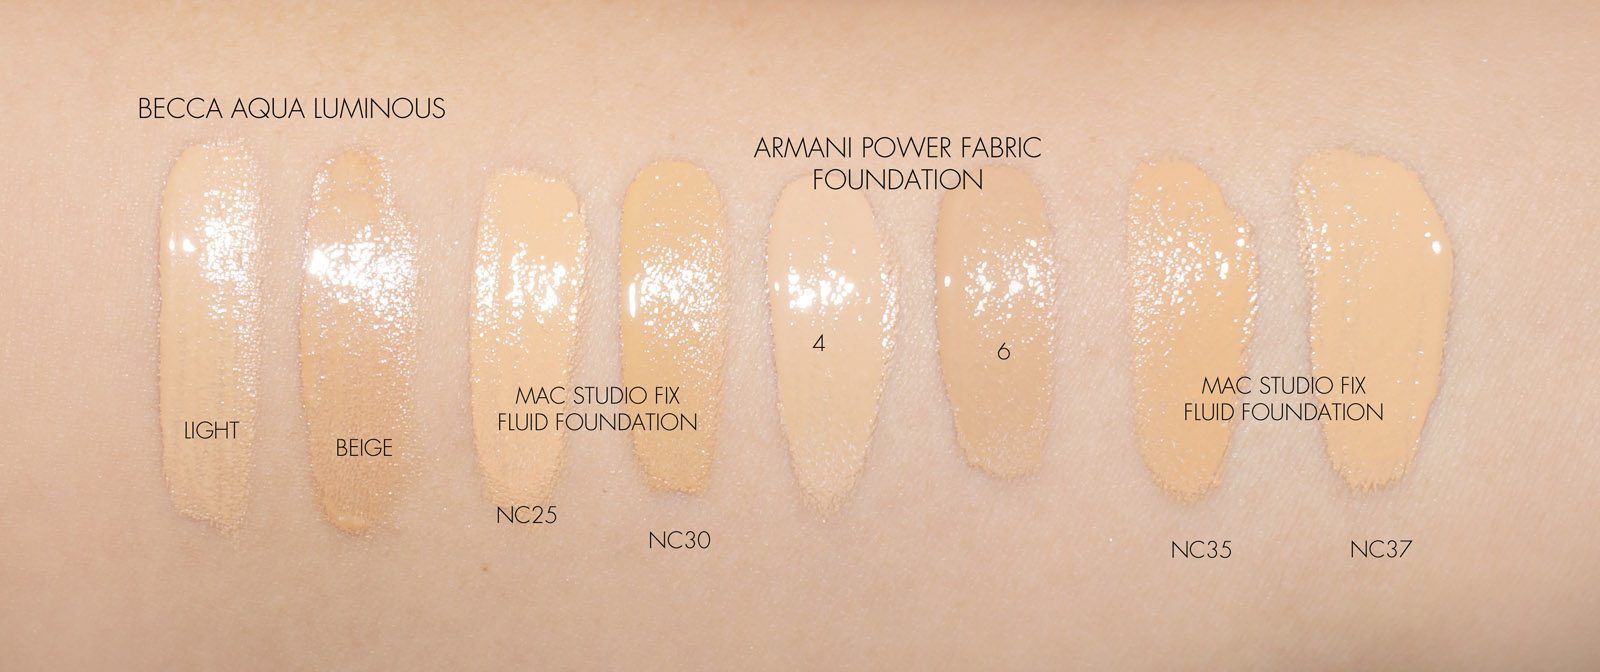 giorgio armani power fabric foundation 3.5